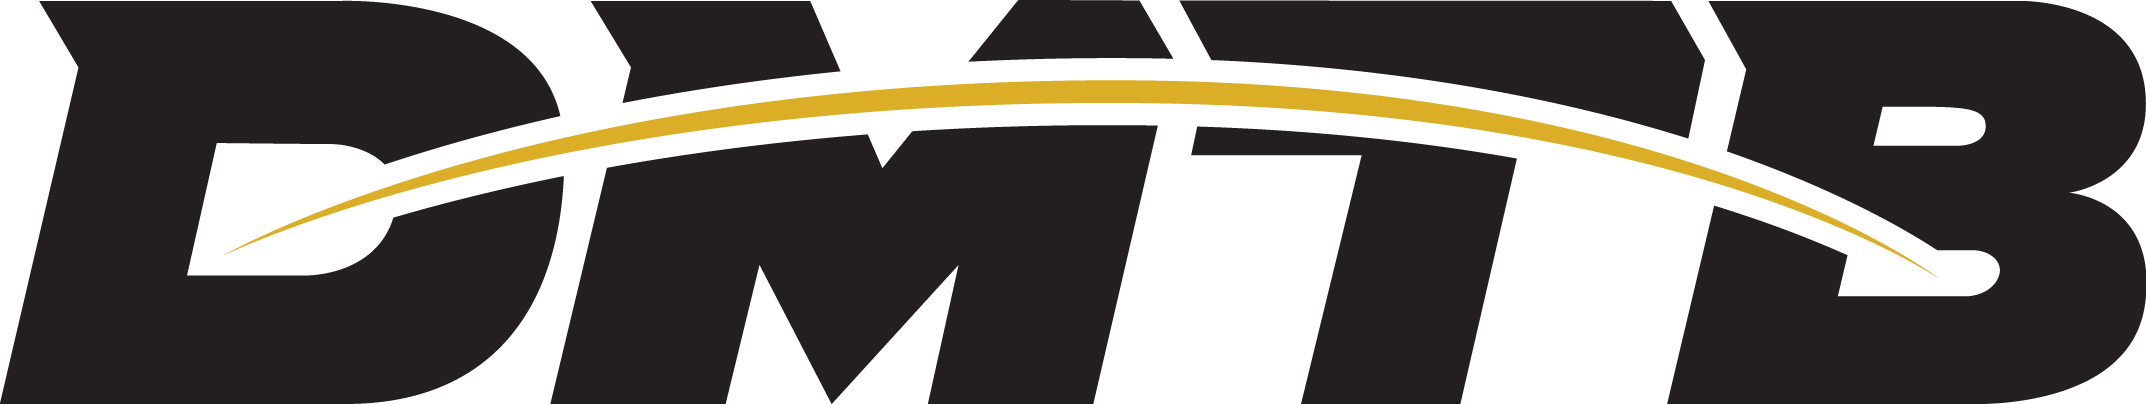 Des Moines Truck Brokers, Inc. logo